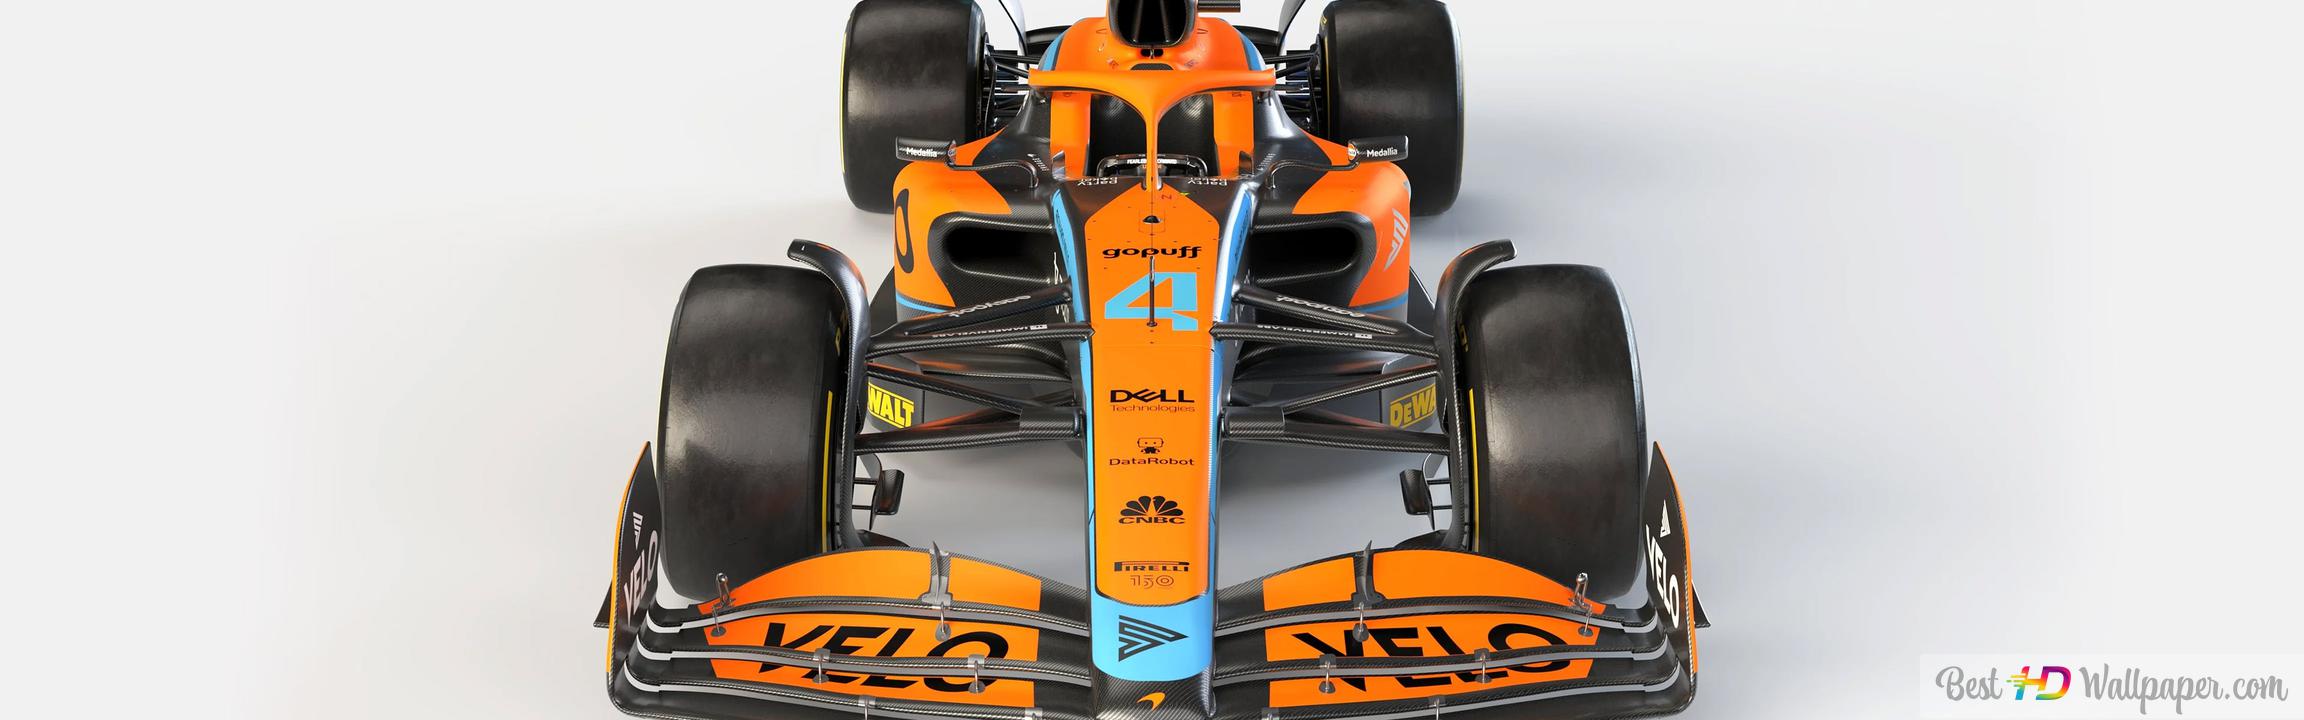 McLaren mcl36 formula 1 2022 new car white background front view HD wallpaper download 1 wallpaper